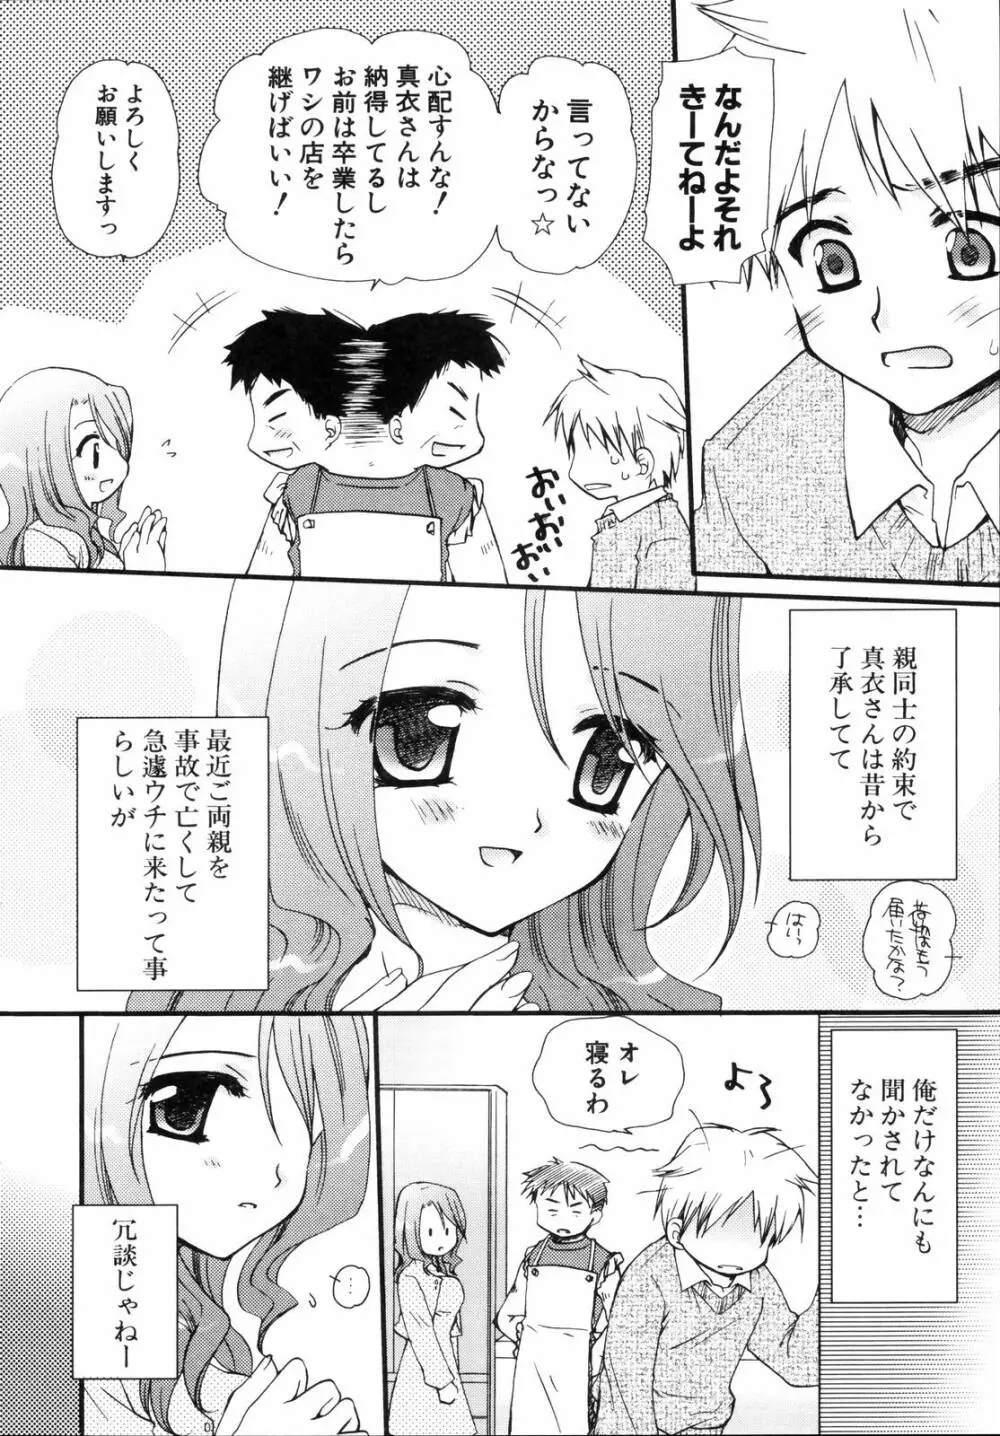 少年少女恋愛学 完全版 159ページ